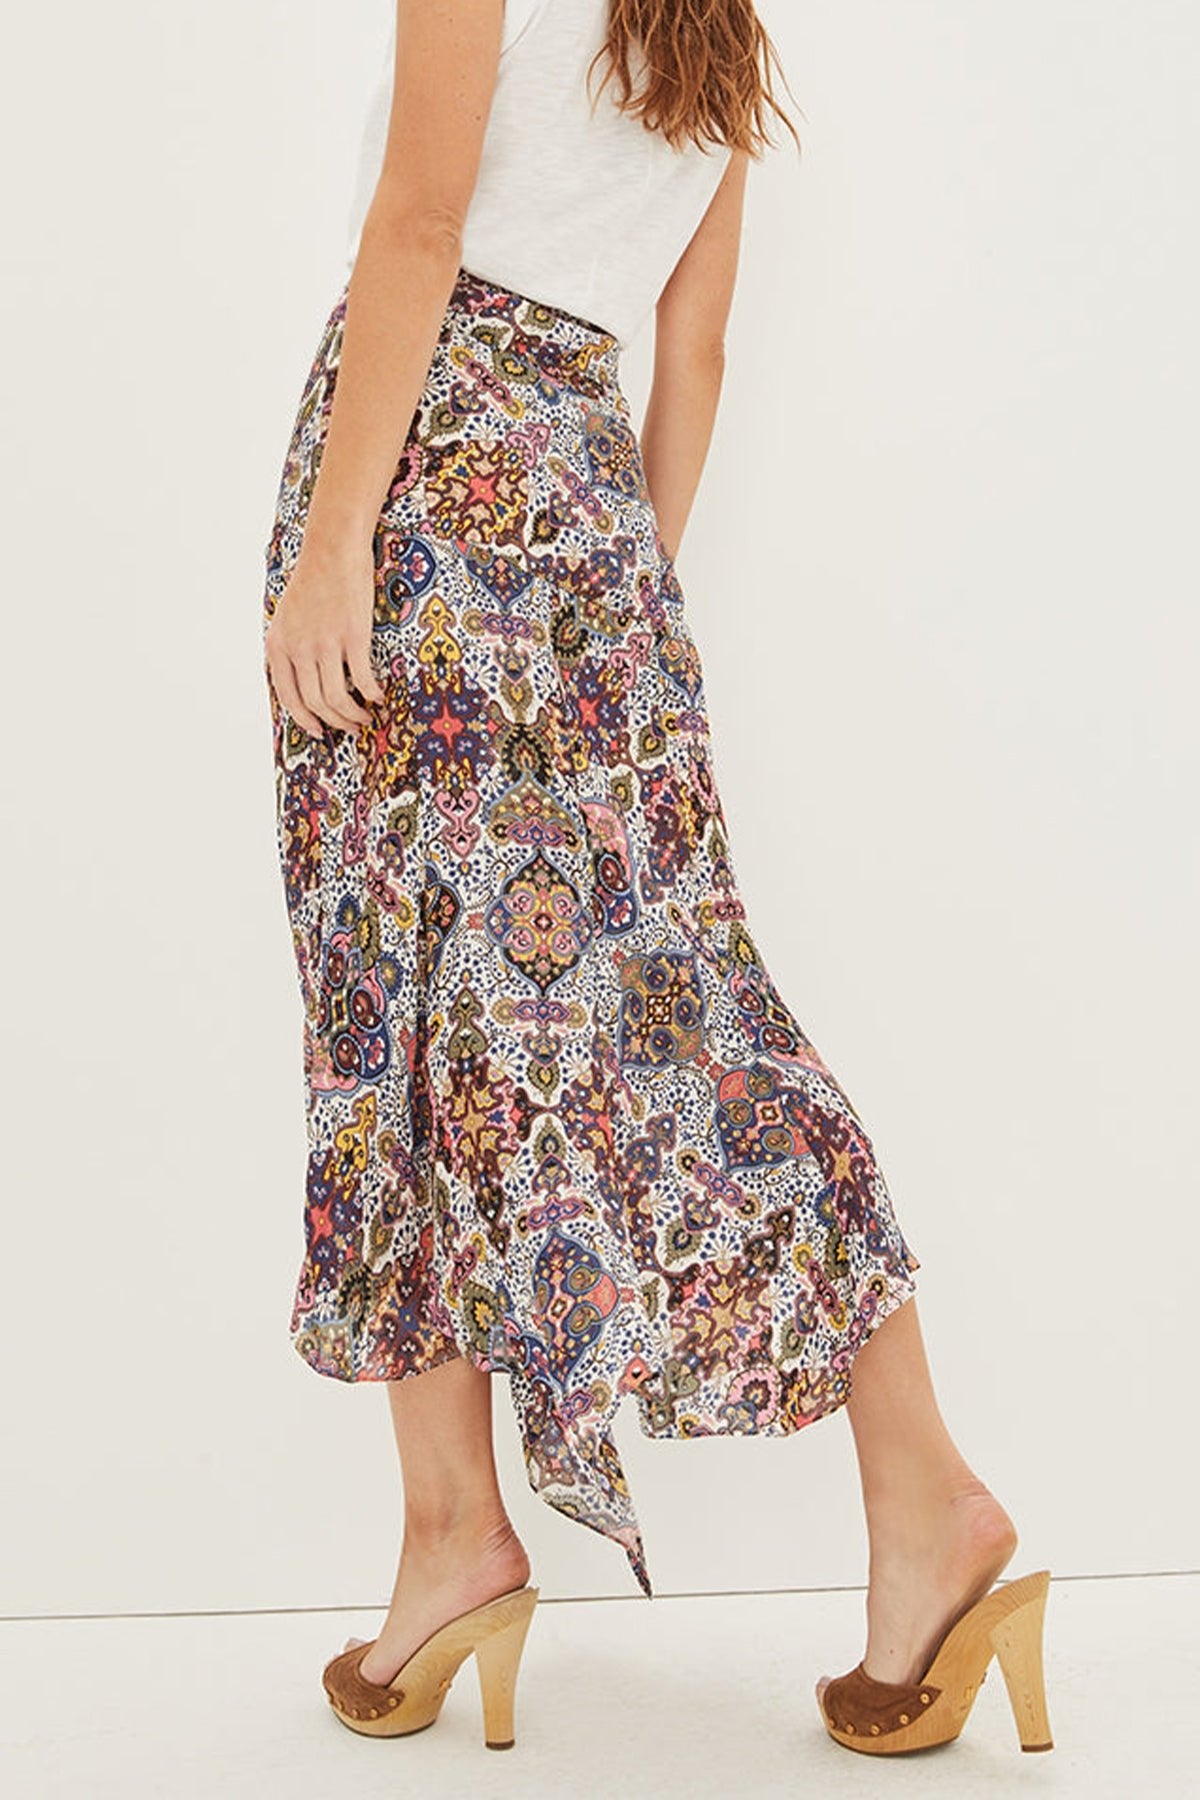 Mac Tapestry-Print Skirt in Multi - shop-olivia.com